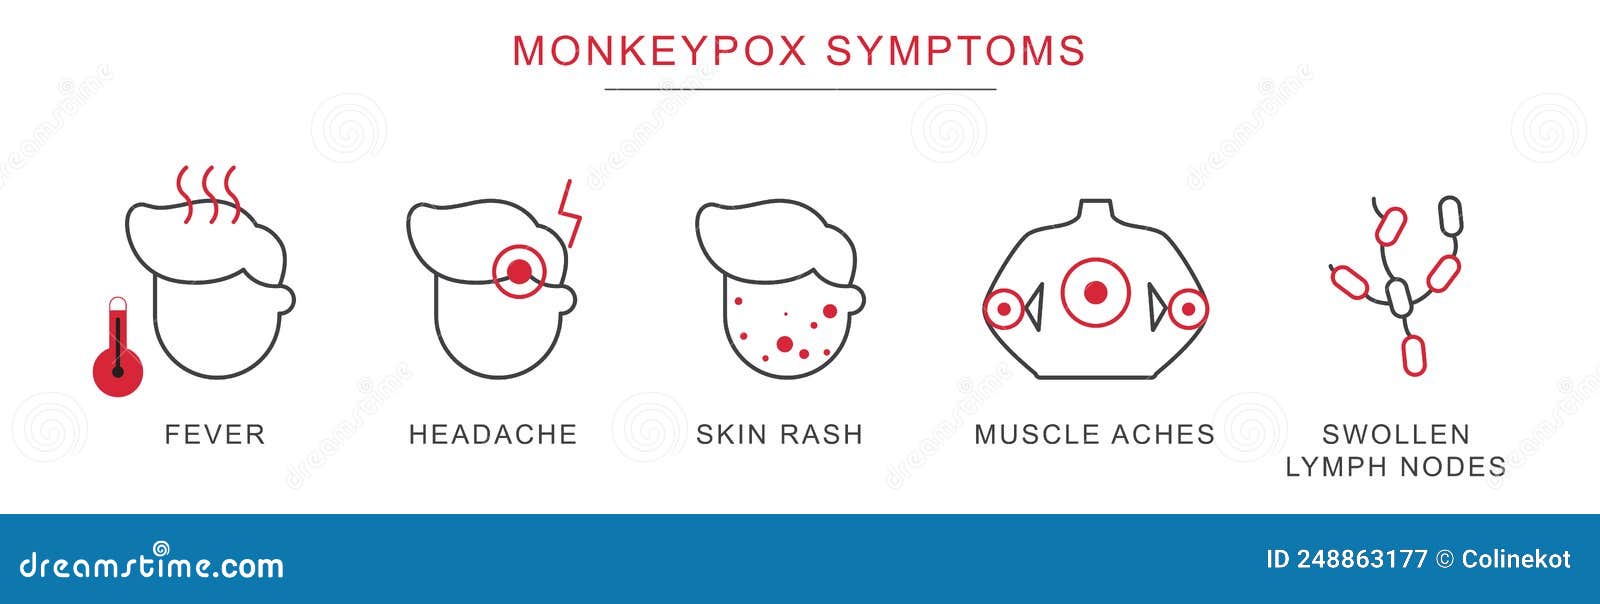 monkeypox symptoms outline 